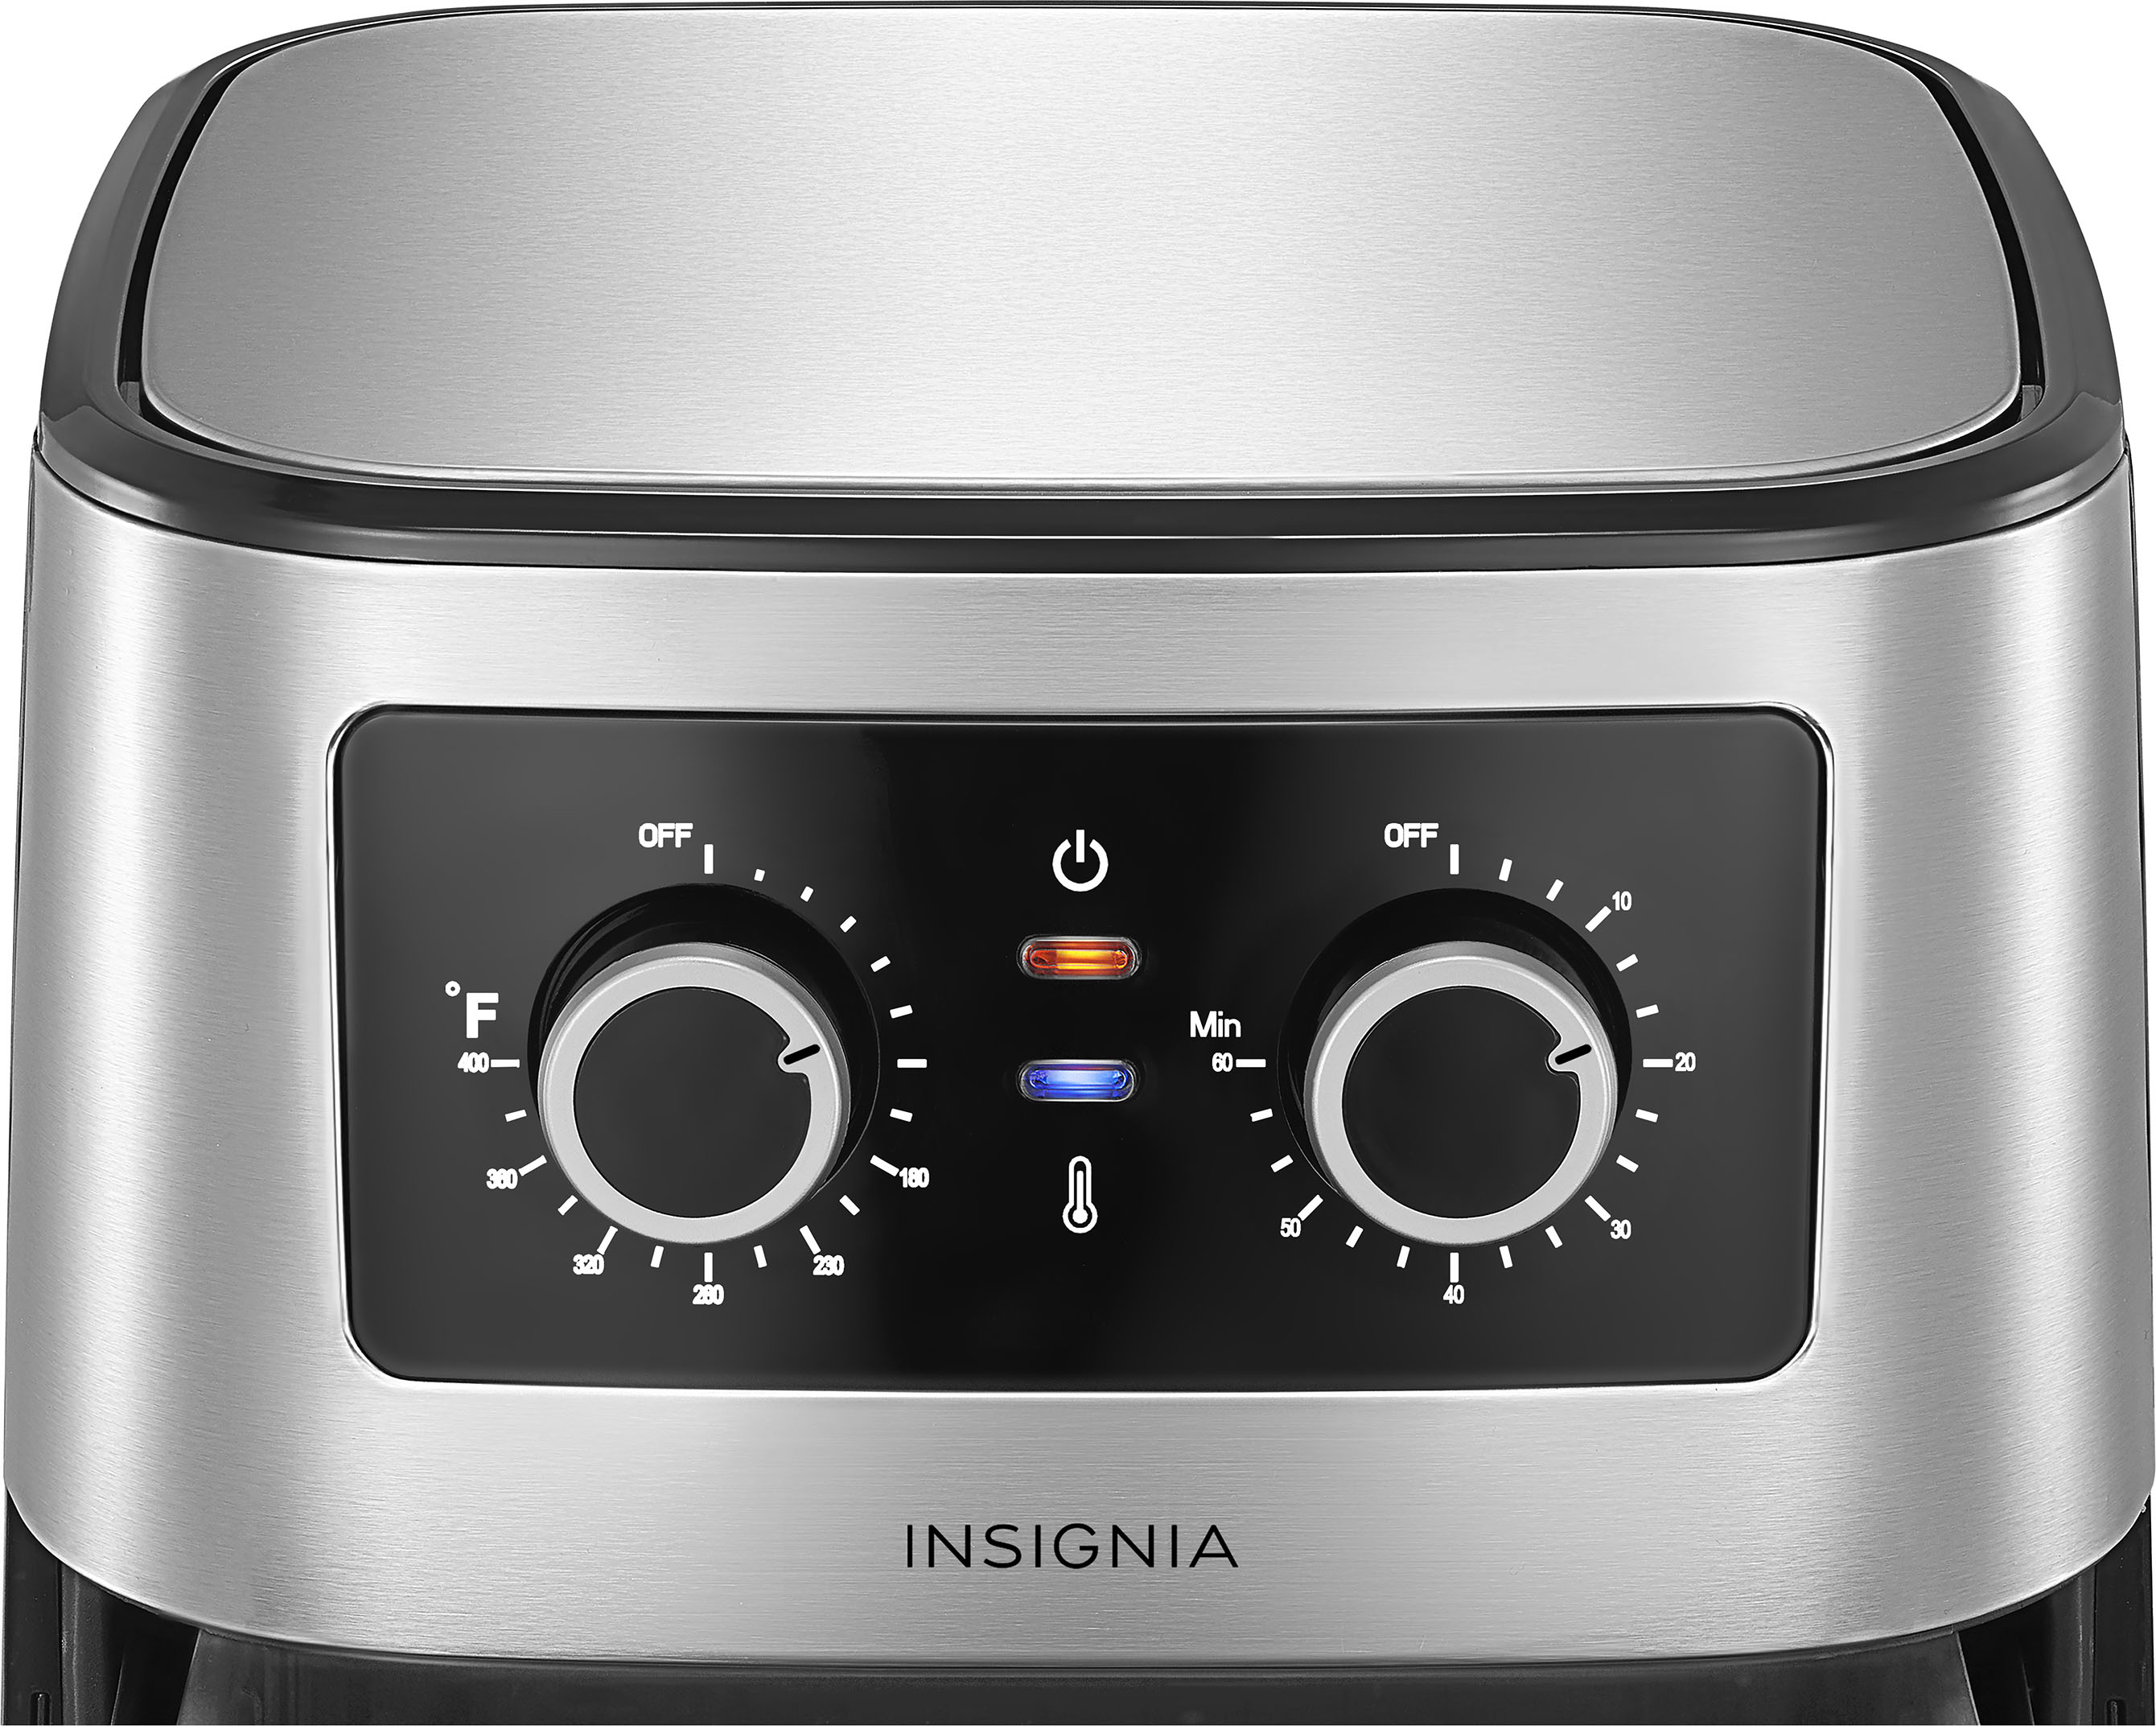 Insignia Digital Air Fryer (five-quart) is on sale at Best Buy